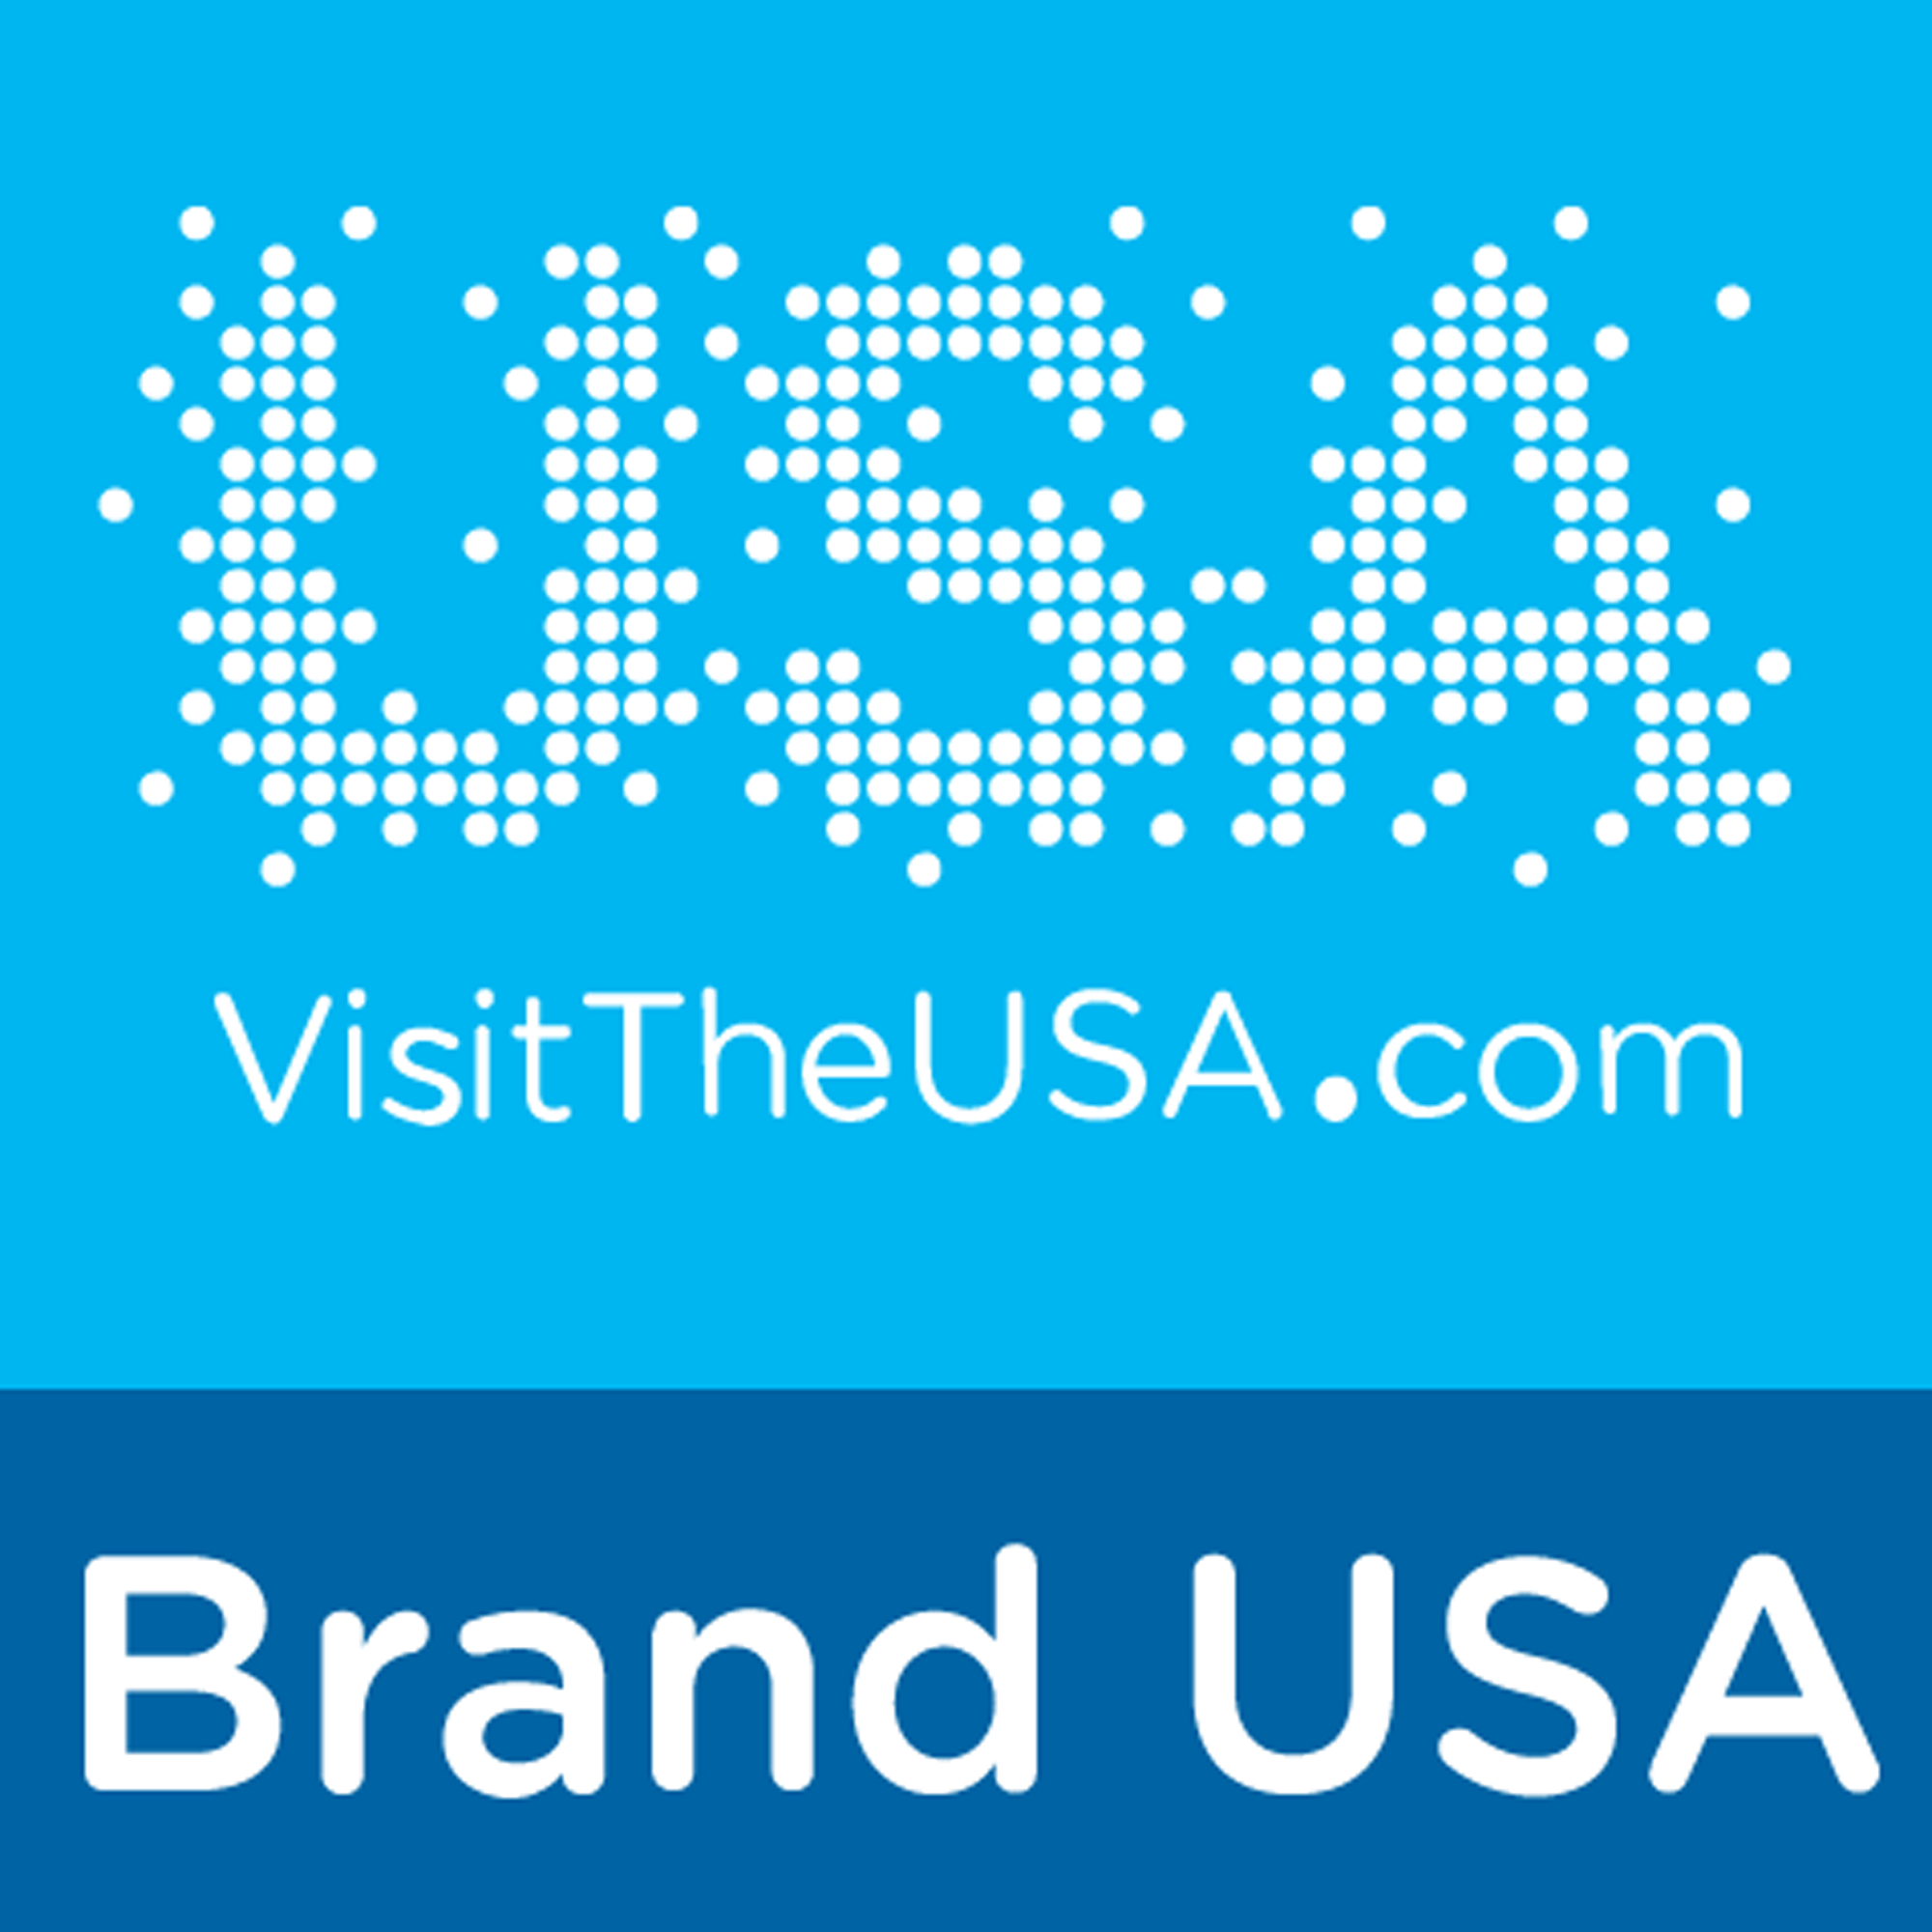 The Brand USA